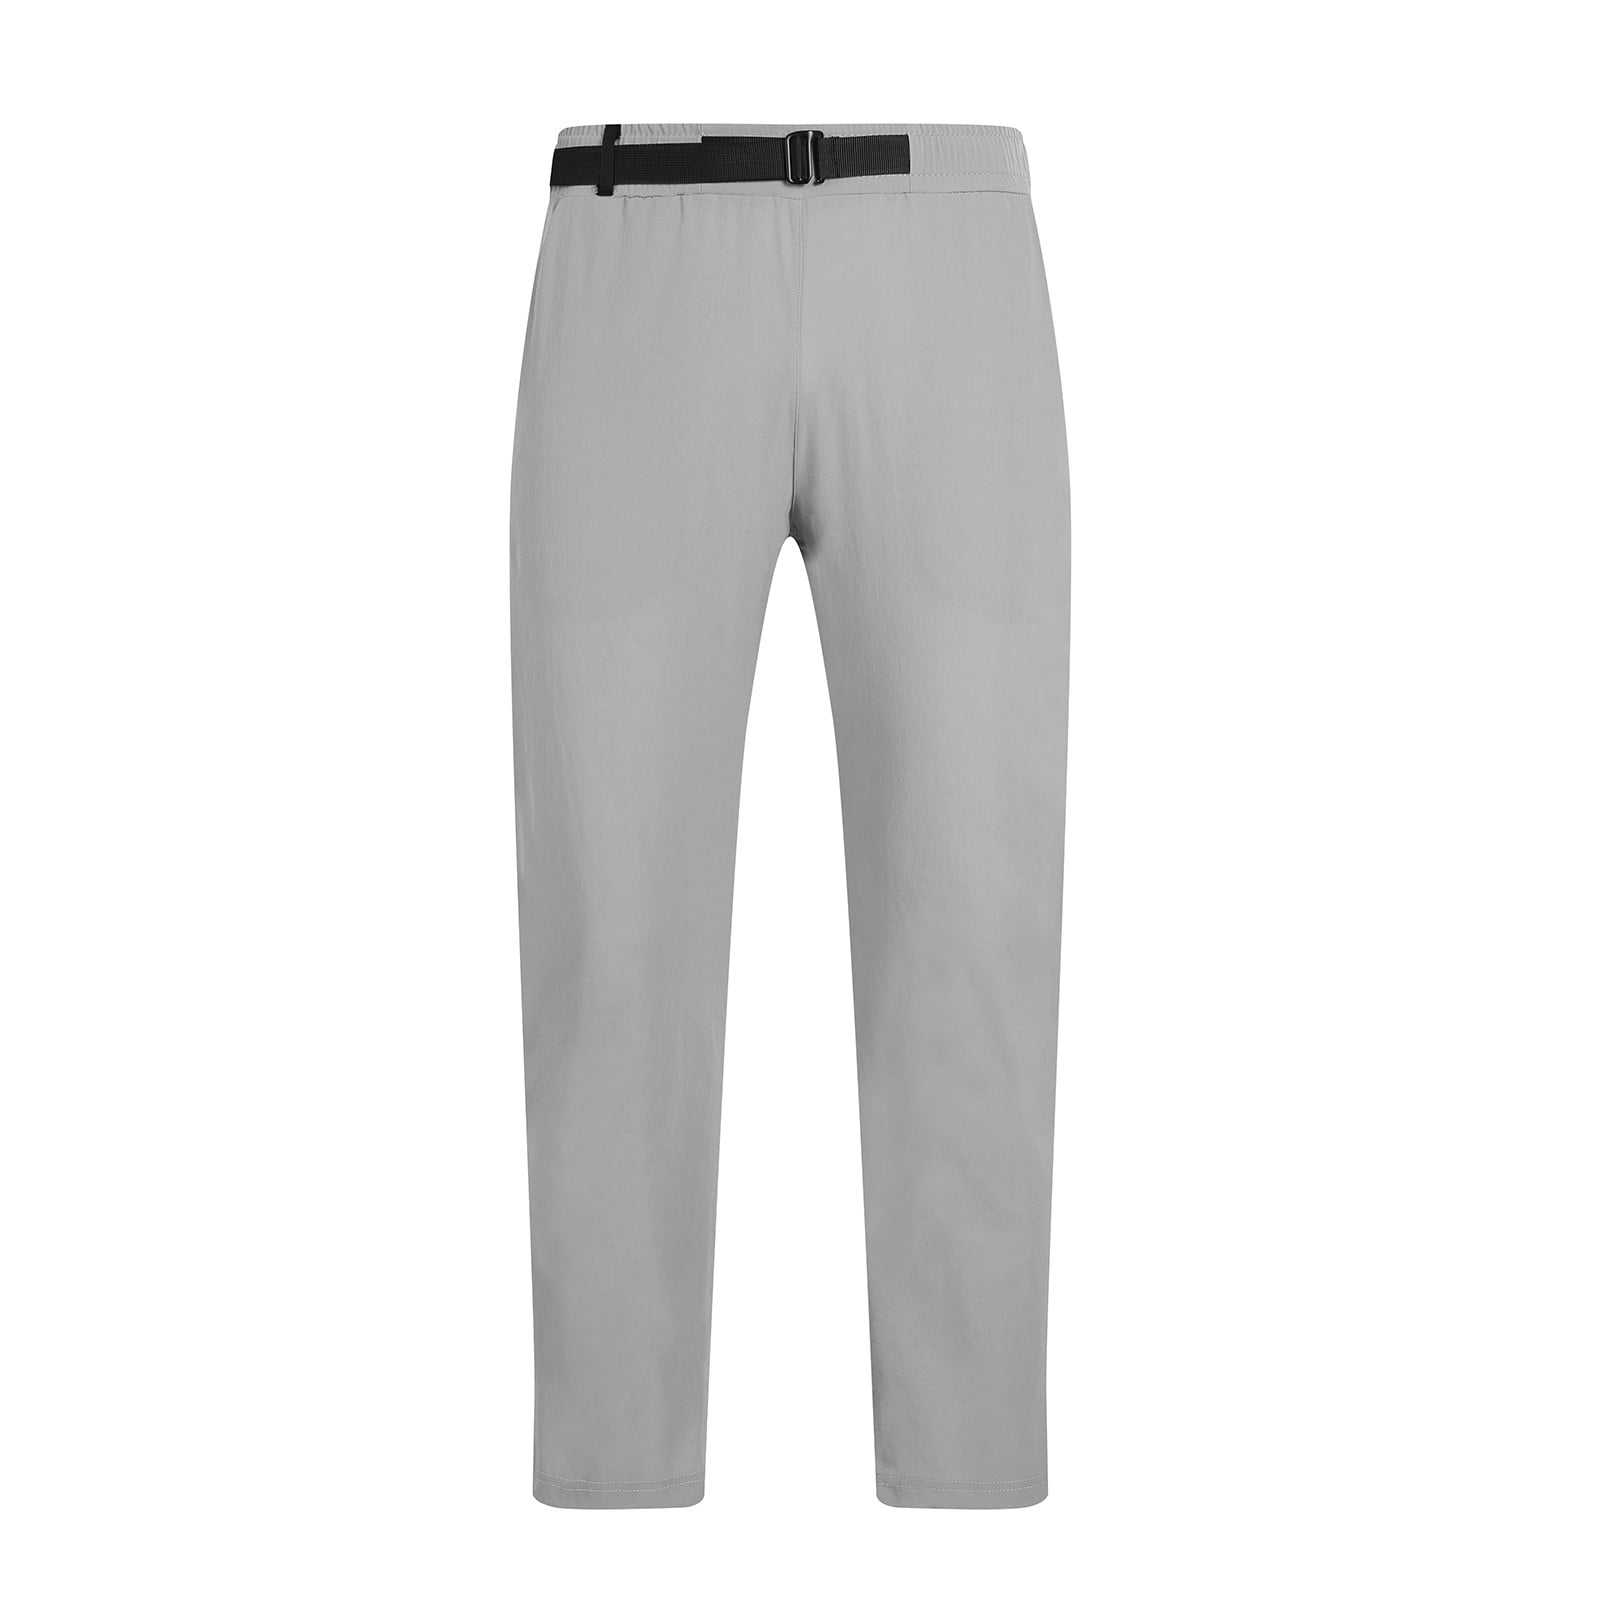 amelAEA Mens Stretch Golf Joggers Pants Quick Dry Casual Pants ...